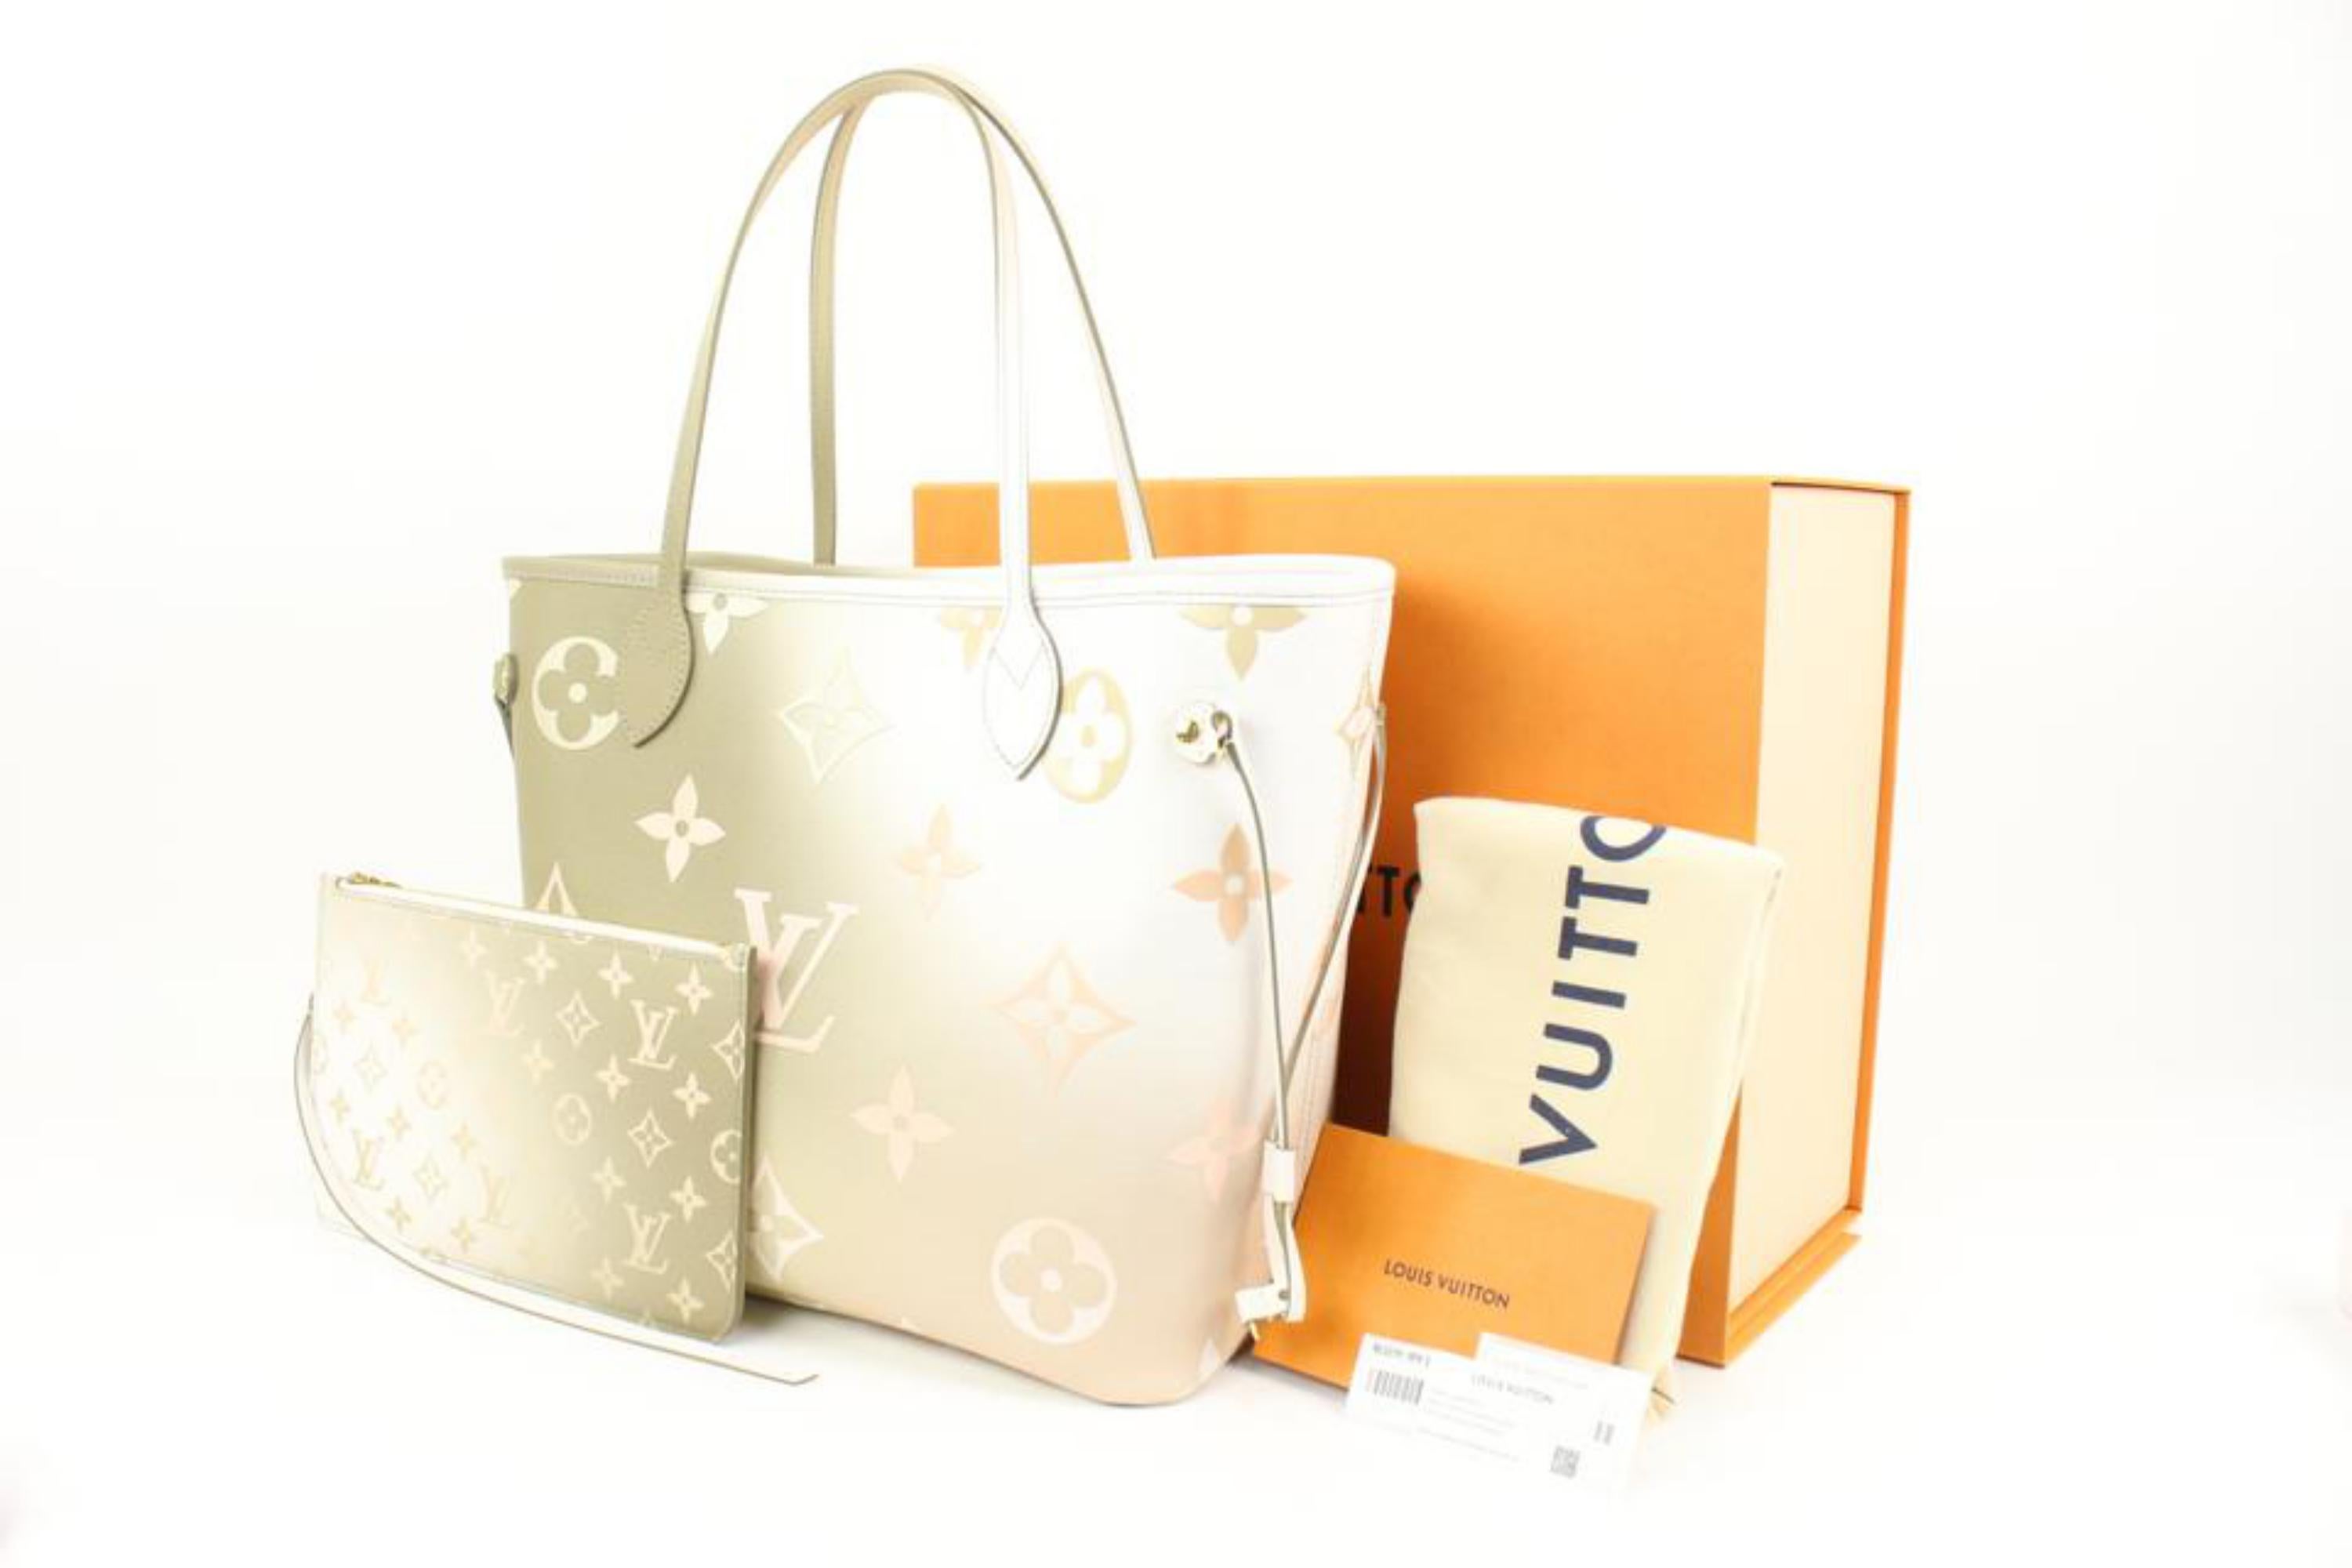 Louis Vuitton - Authenticated Neverfull Handbag - Cotton Multicolour for Women, Very Good Condition